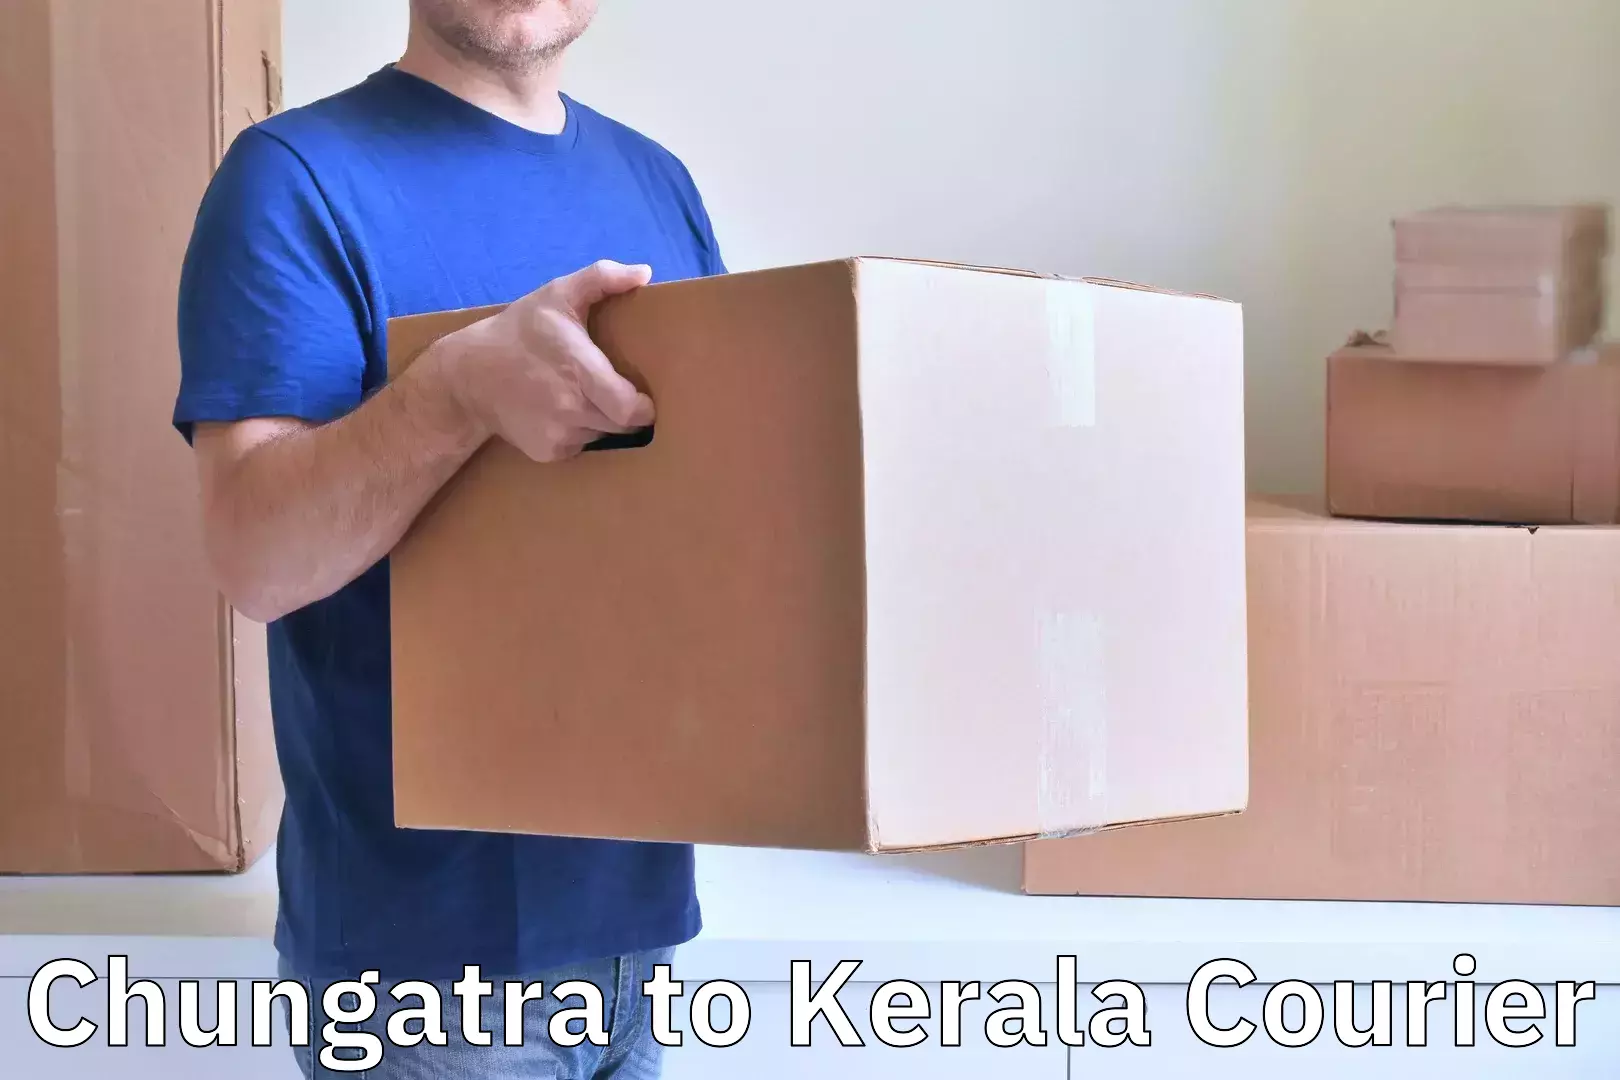 Doorstep luggage pickup Chungatra to Kerala